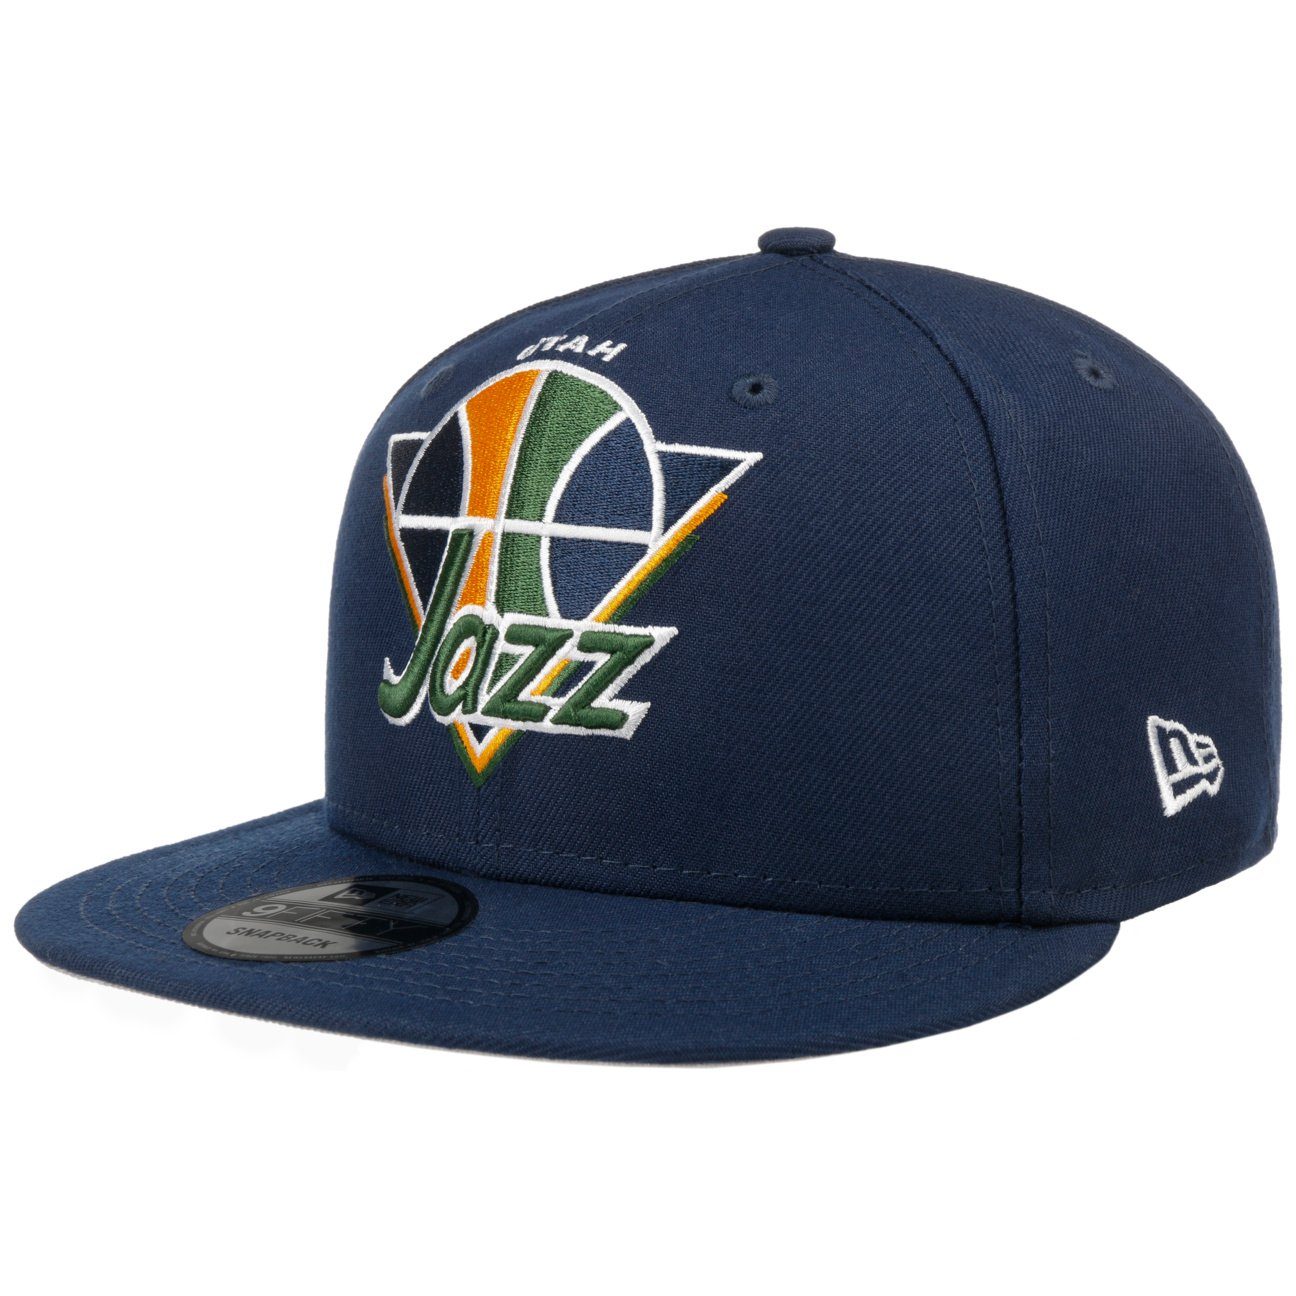 New Basecap Baseball Snapback Cap (1-St) Era